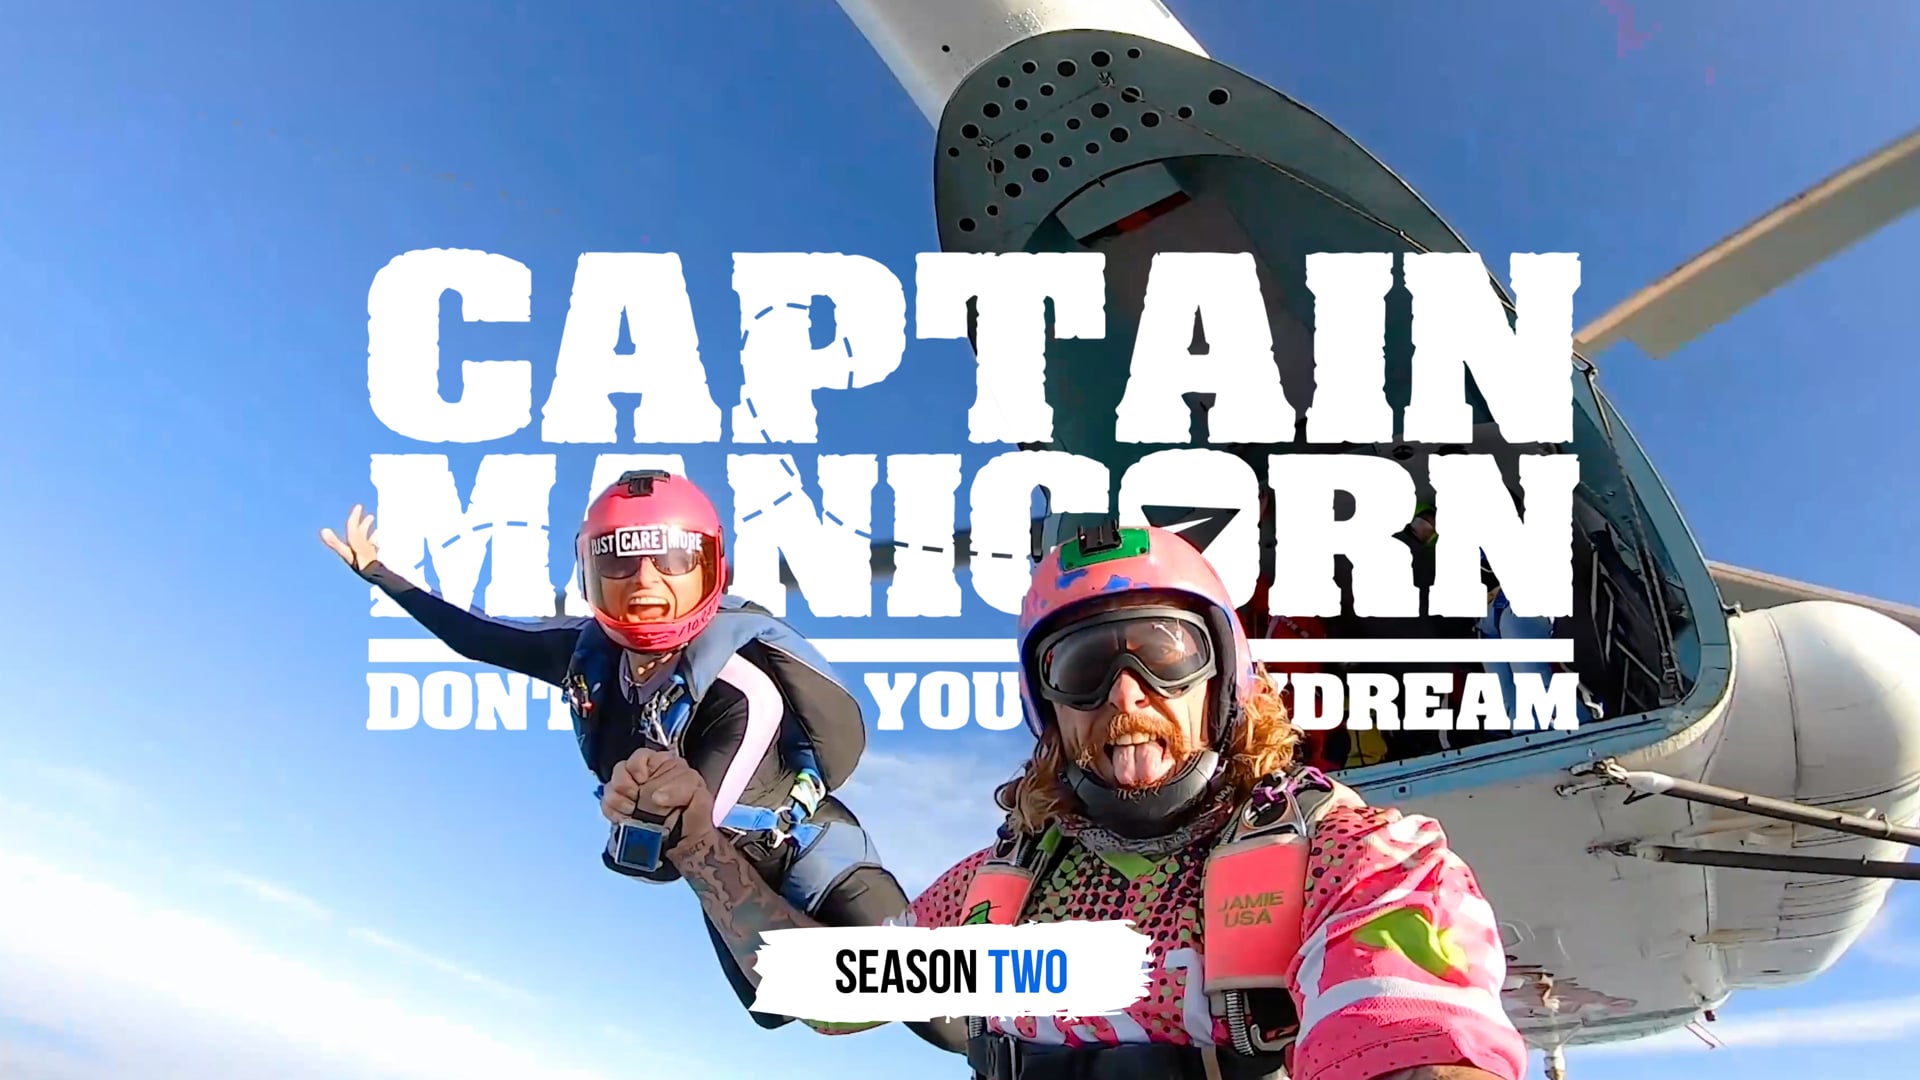 Captain Manicorn - Season 2 Trailer